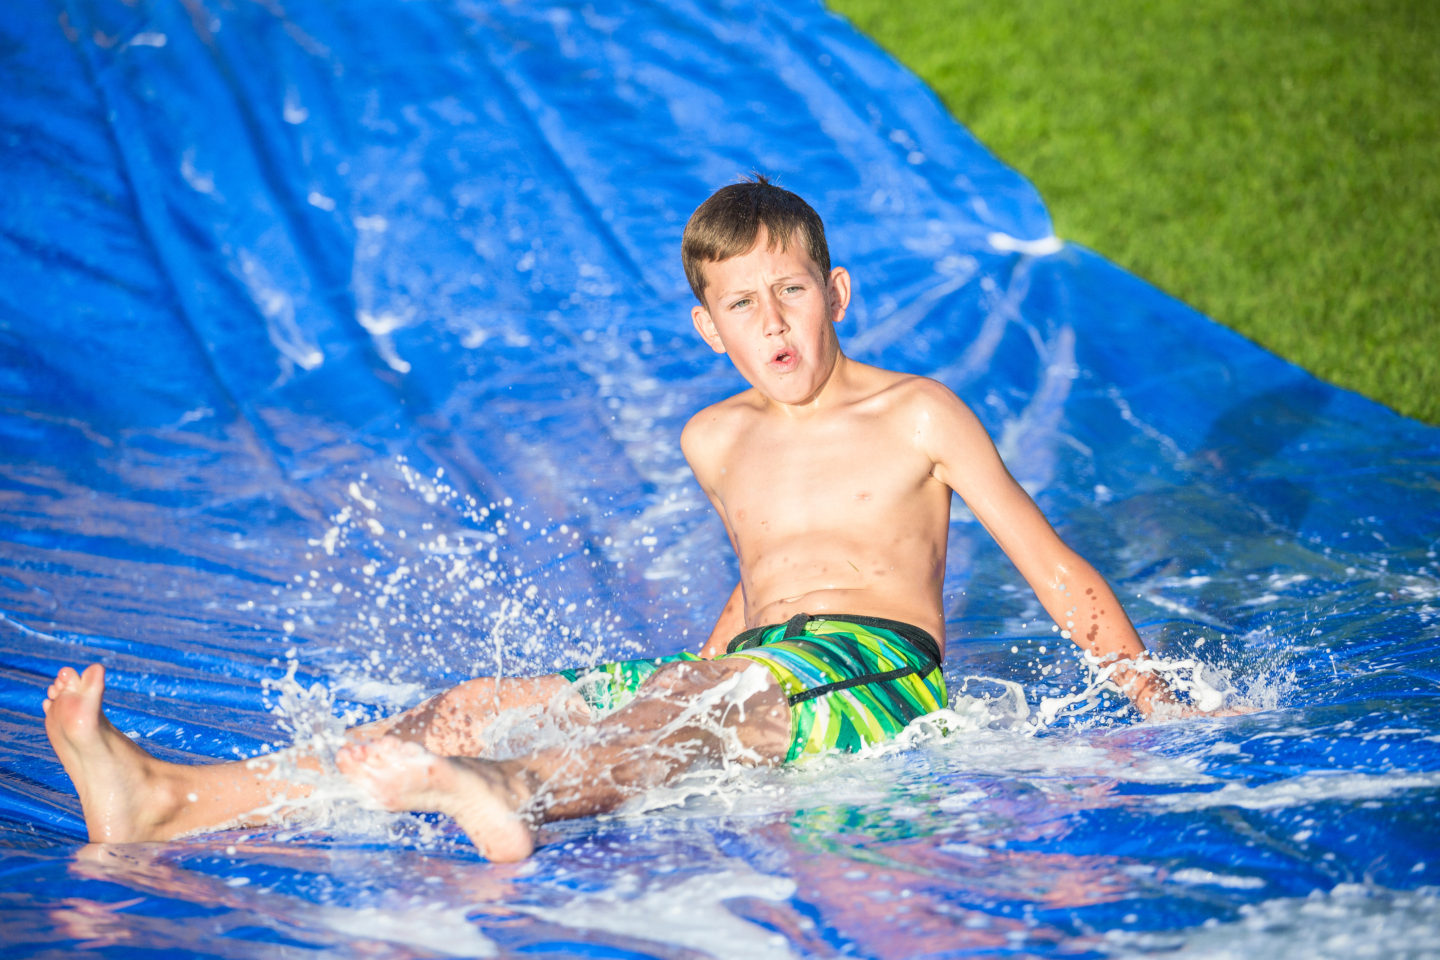 Best Outdoor Family Bonding Activities To Try This Summer: Slip 'N Slide